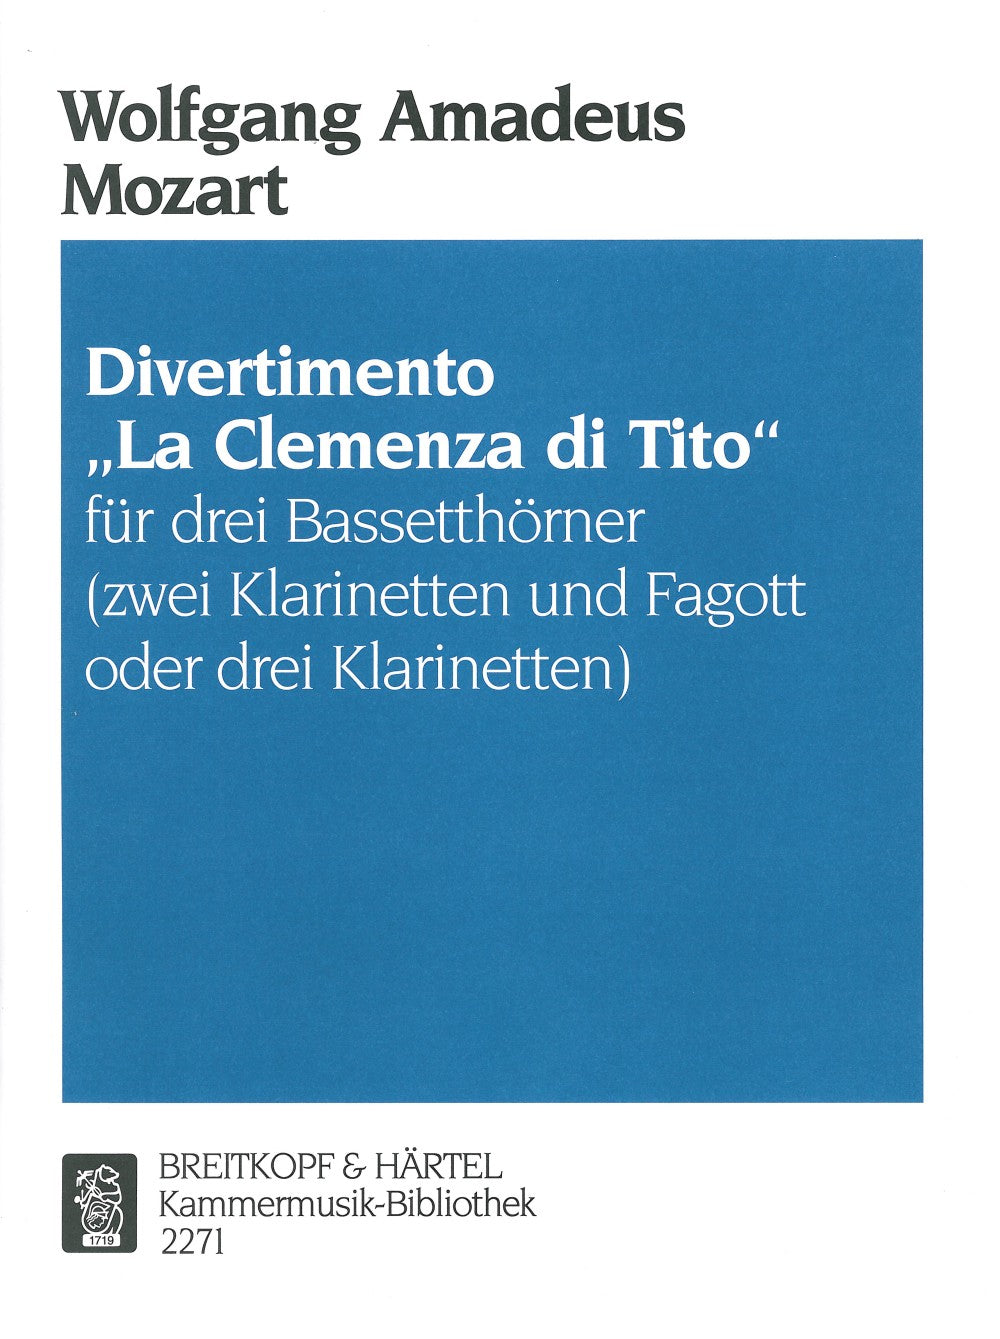 Mozart: Divertimento "La clemenza di Tito" (arr. for 3 basset horns)